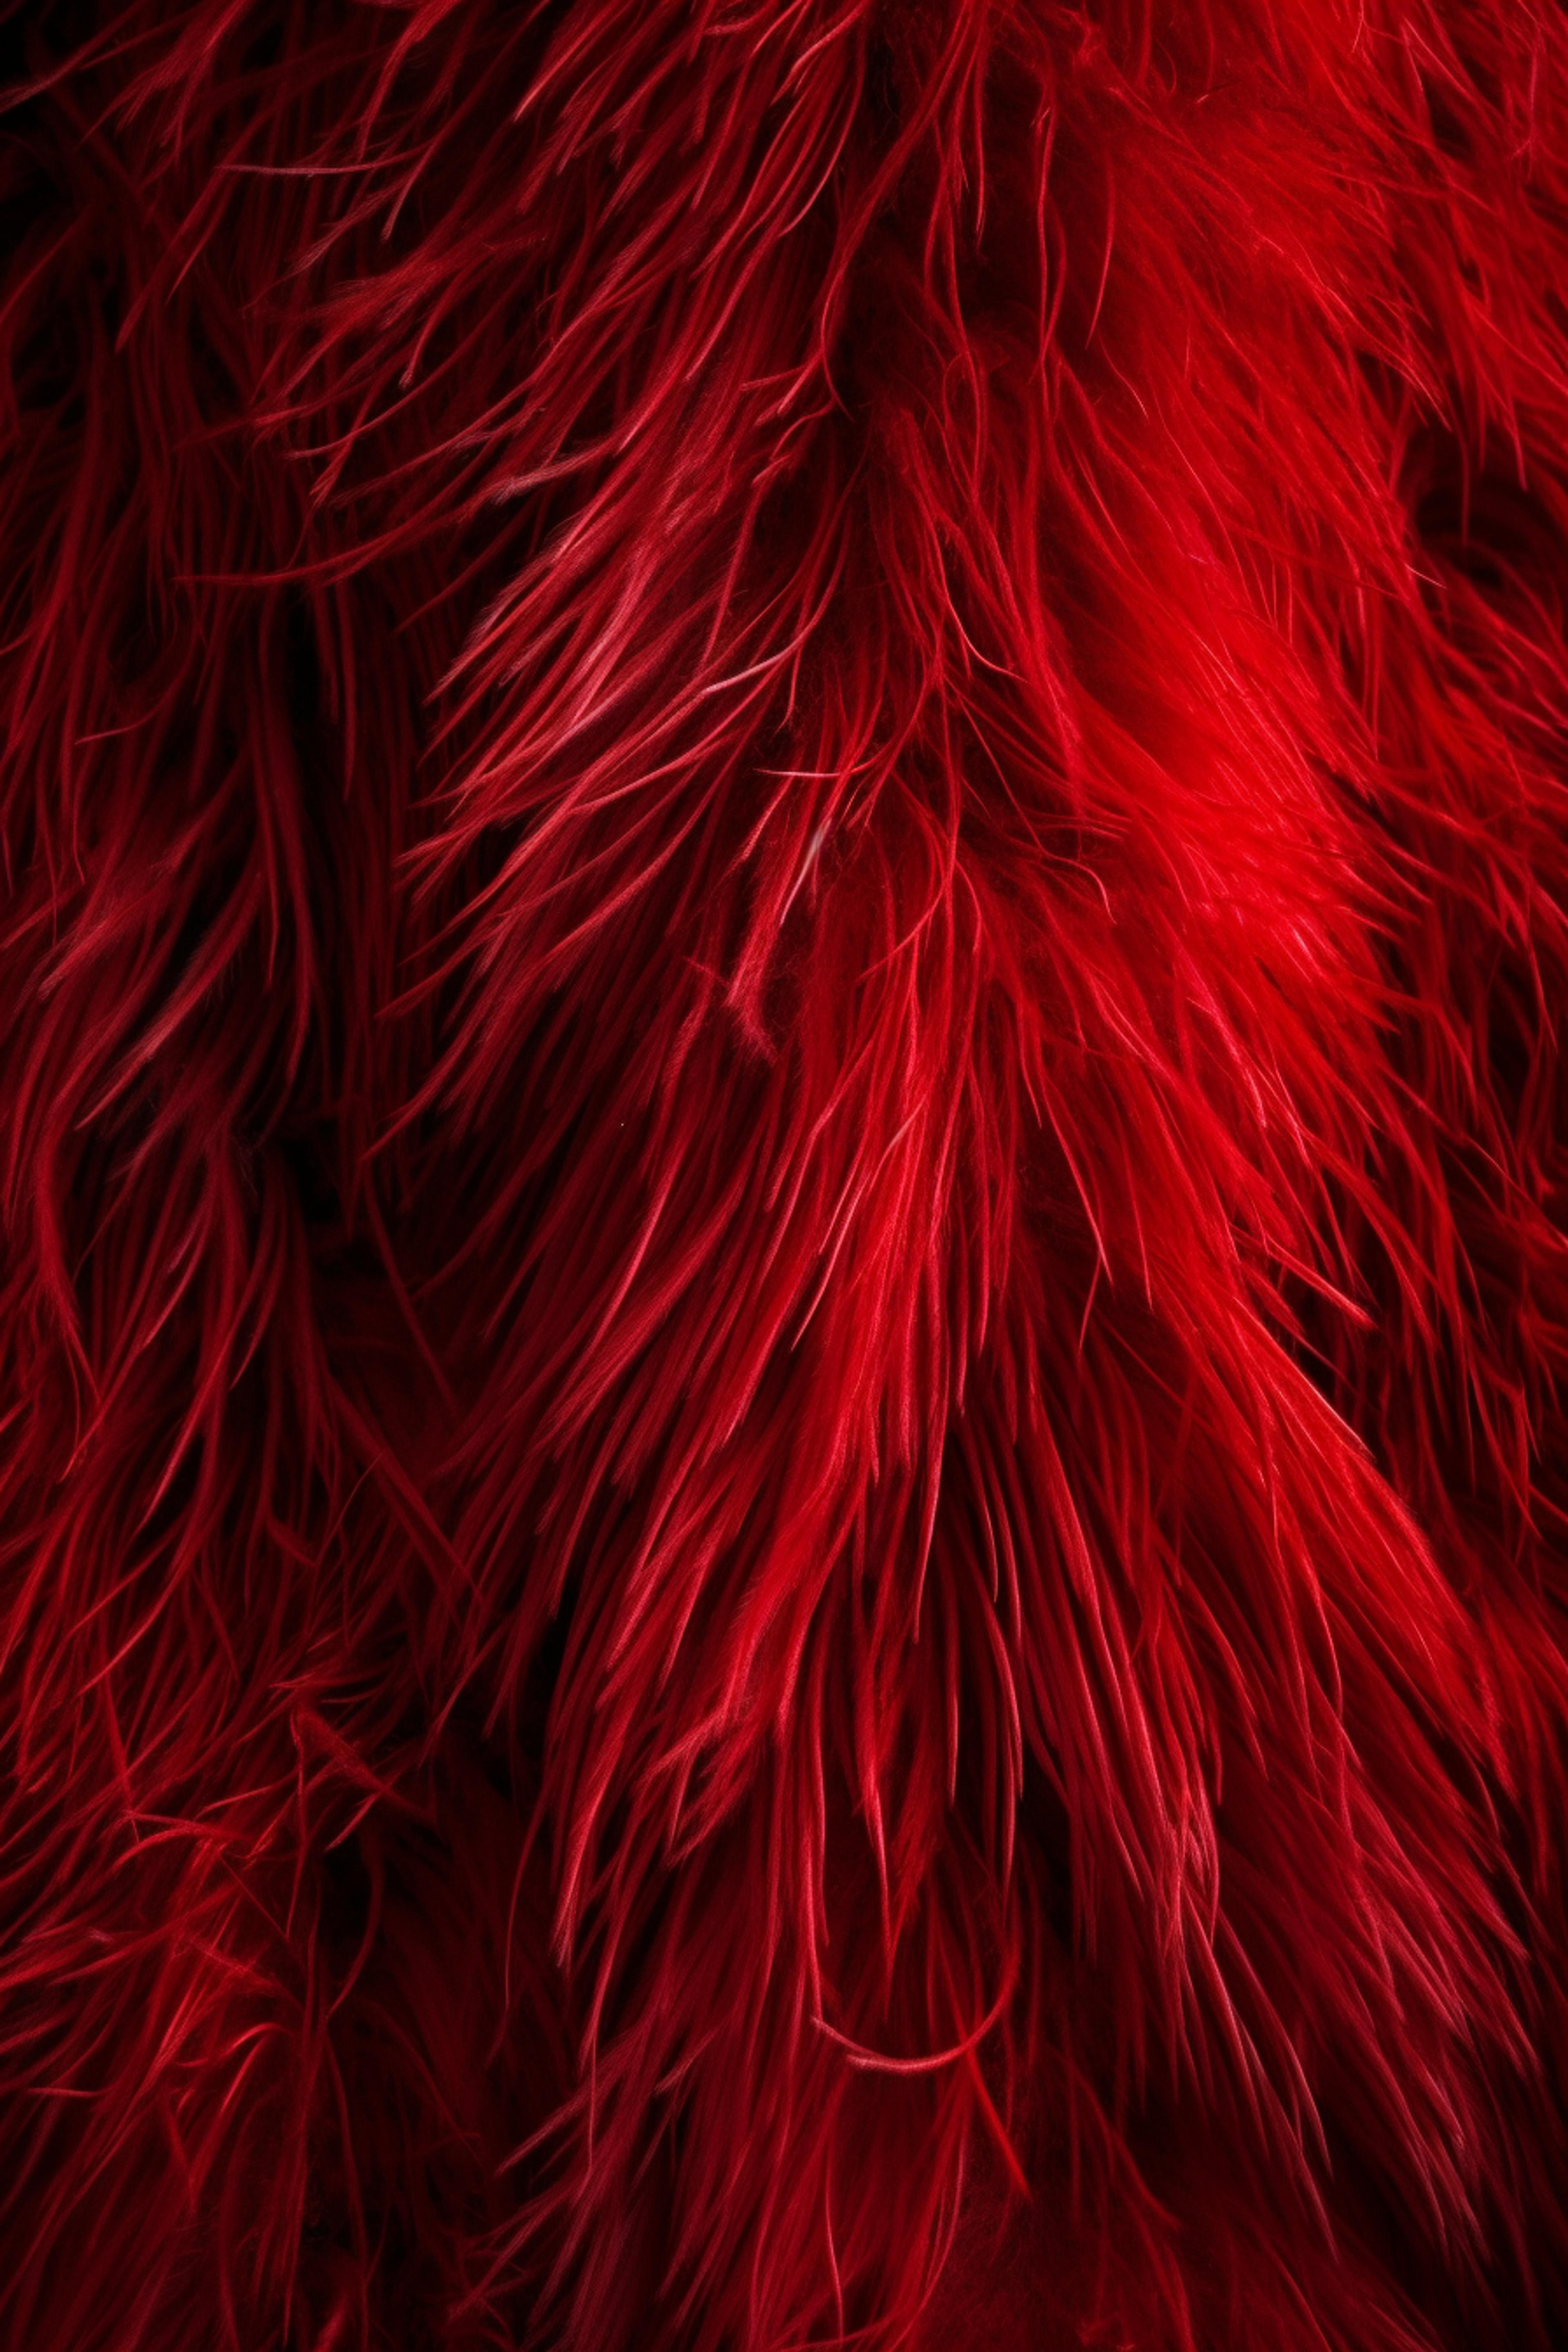  Red Fox Fur Pelt/Tanned Skins